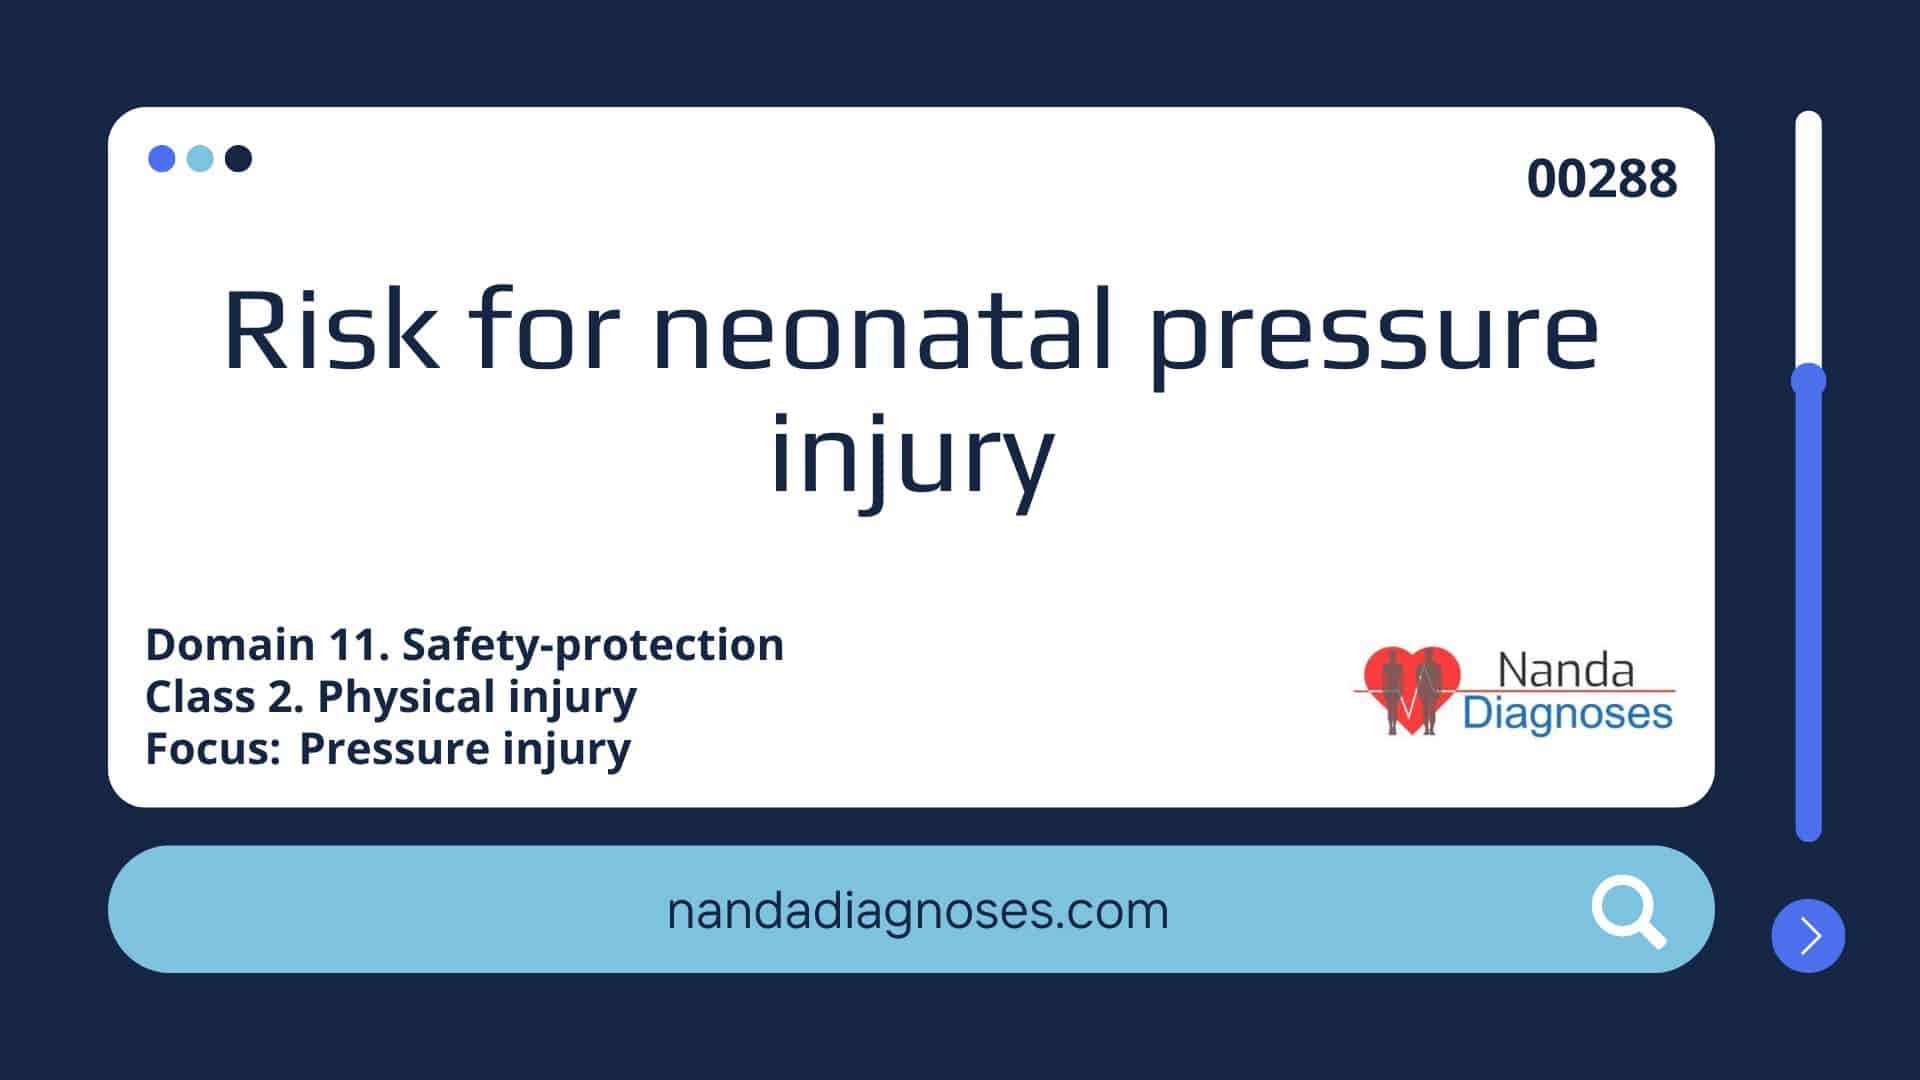 Nursing diagnosis Risk for neonatal pressure injury